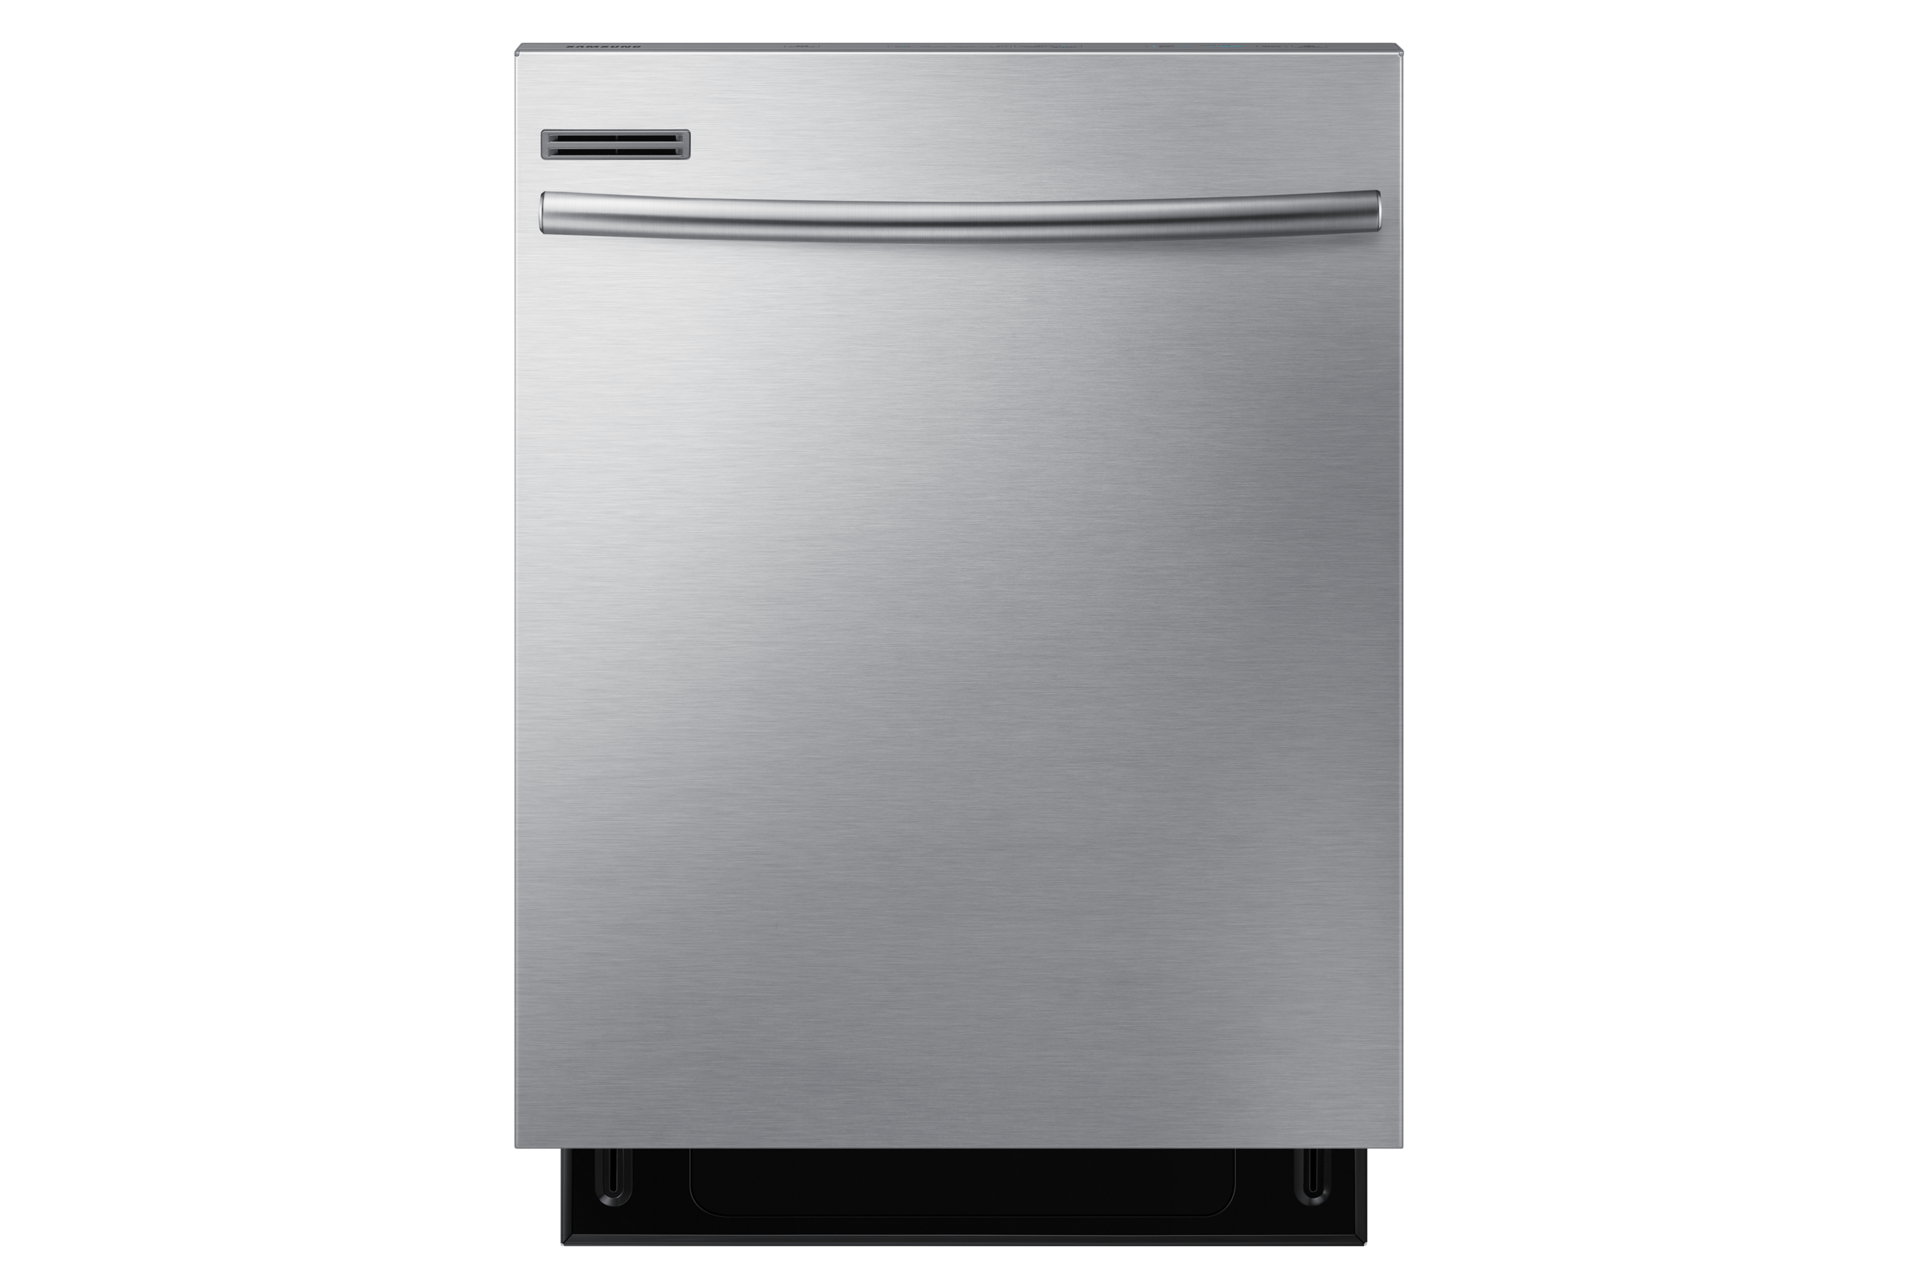 Samsung DW80M3021US Dishwasher with 